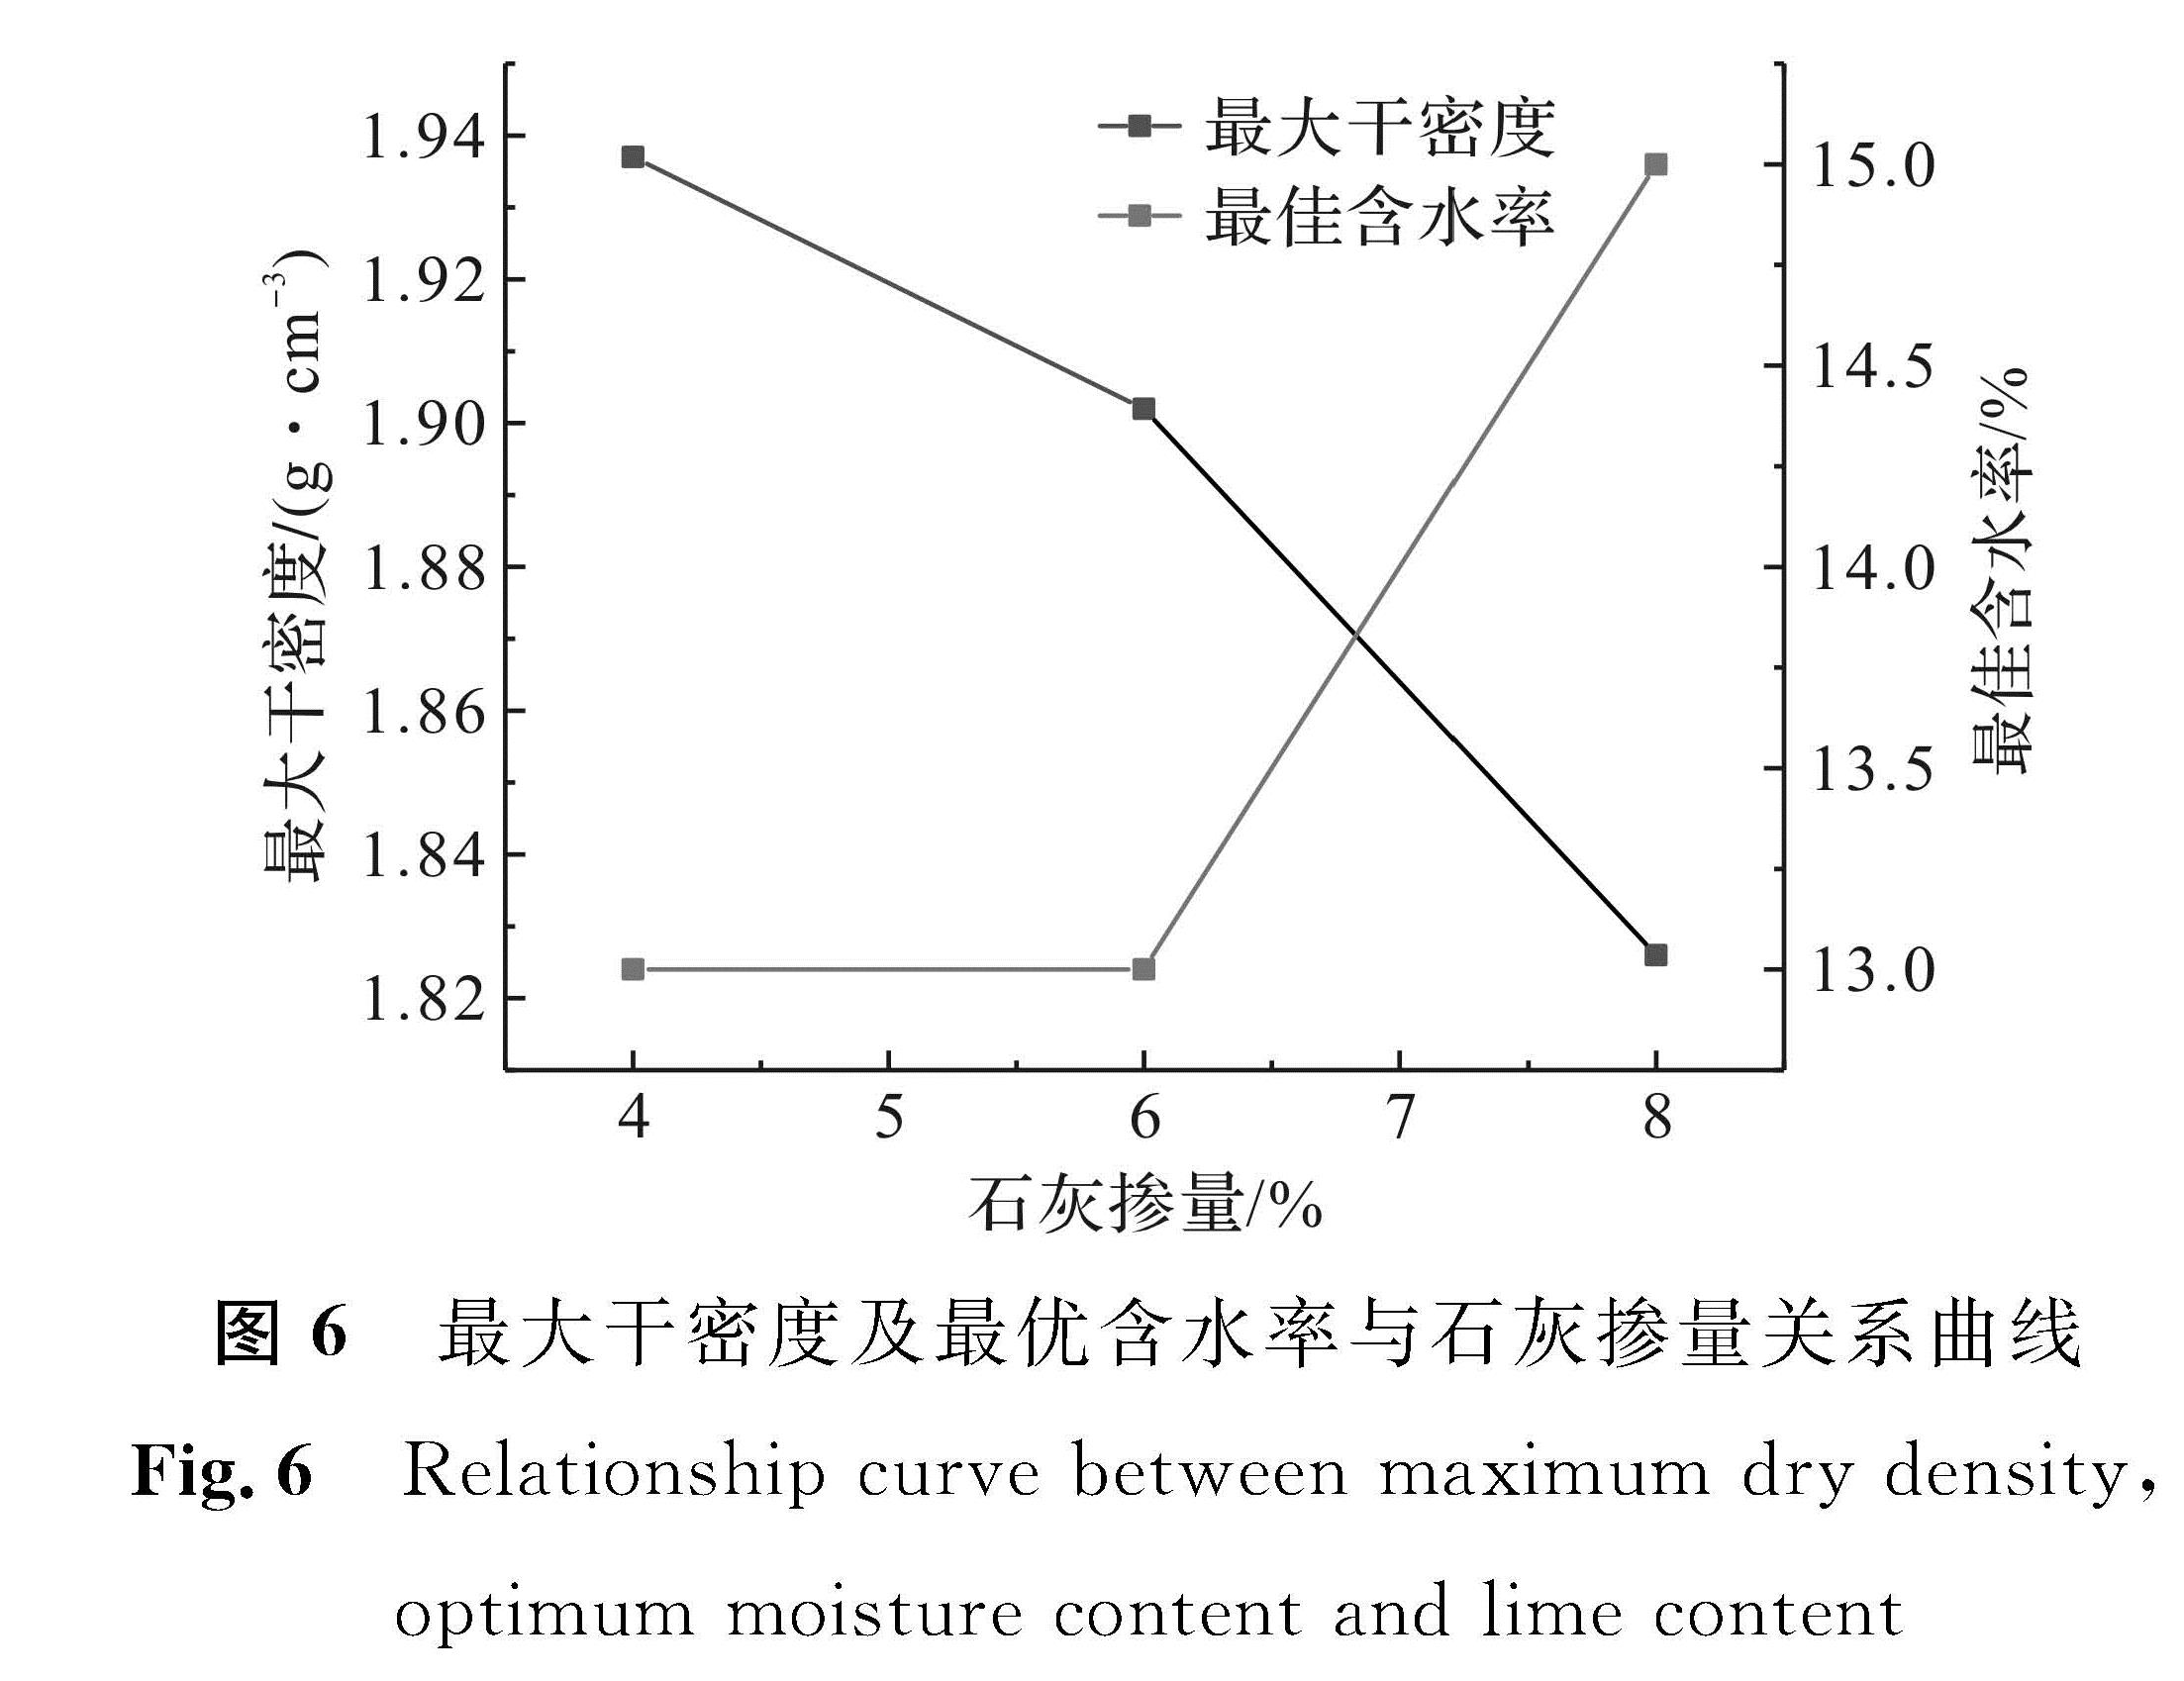 图6 最大干密度及最优含水率与石灰掺量关系曲线<br/>Fig.6 Relationship curve between maximum dry density,optimum moisture content and lime content